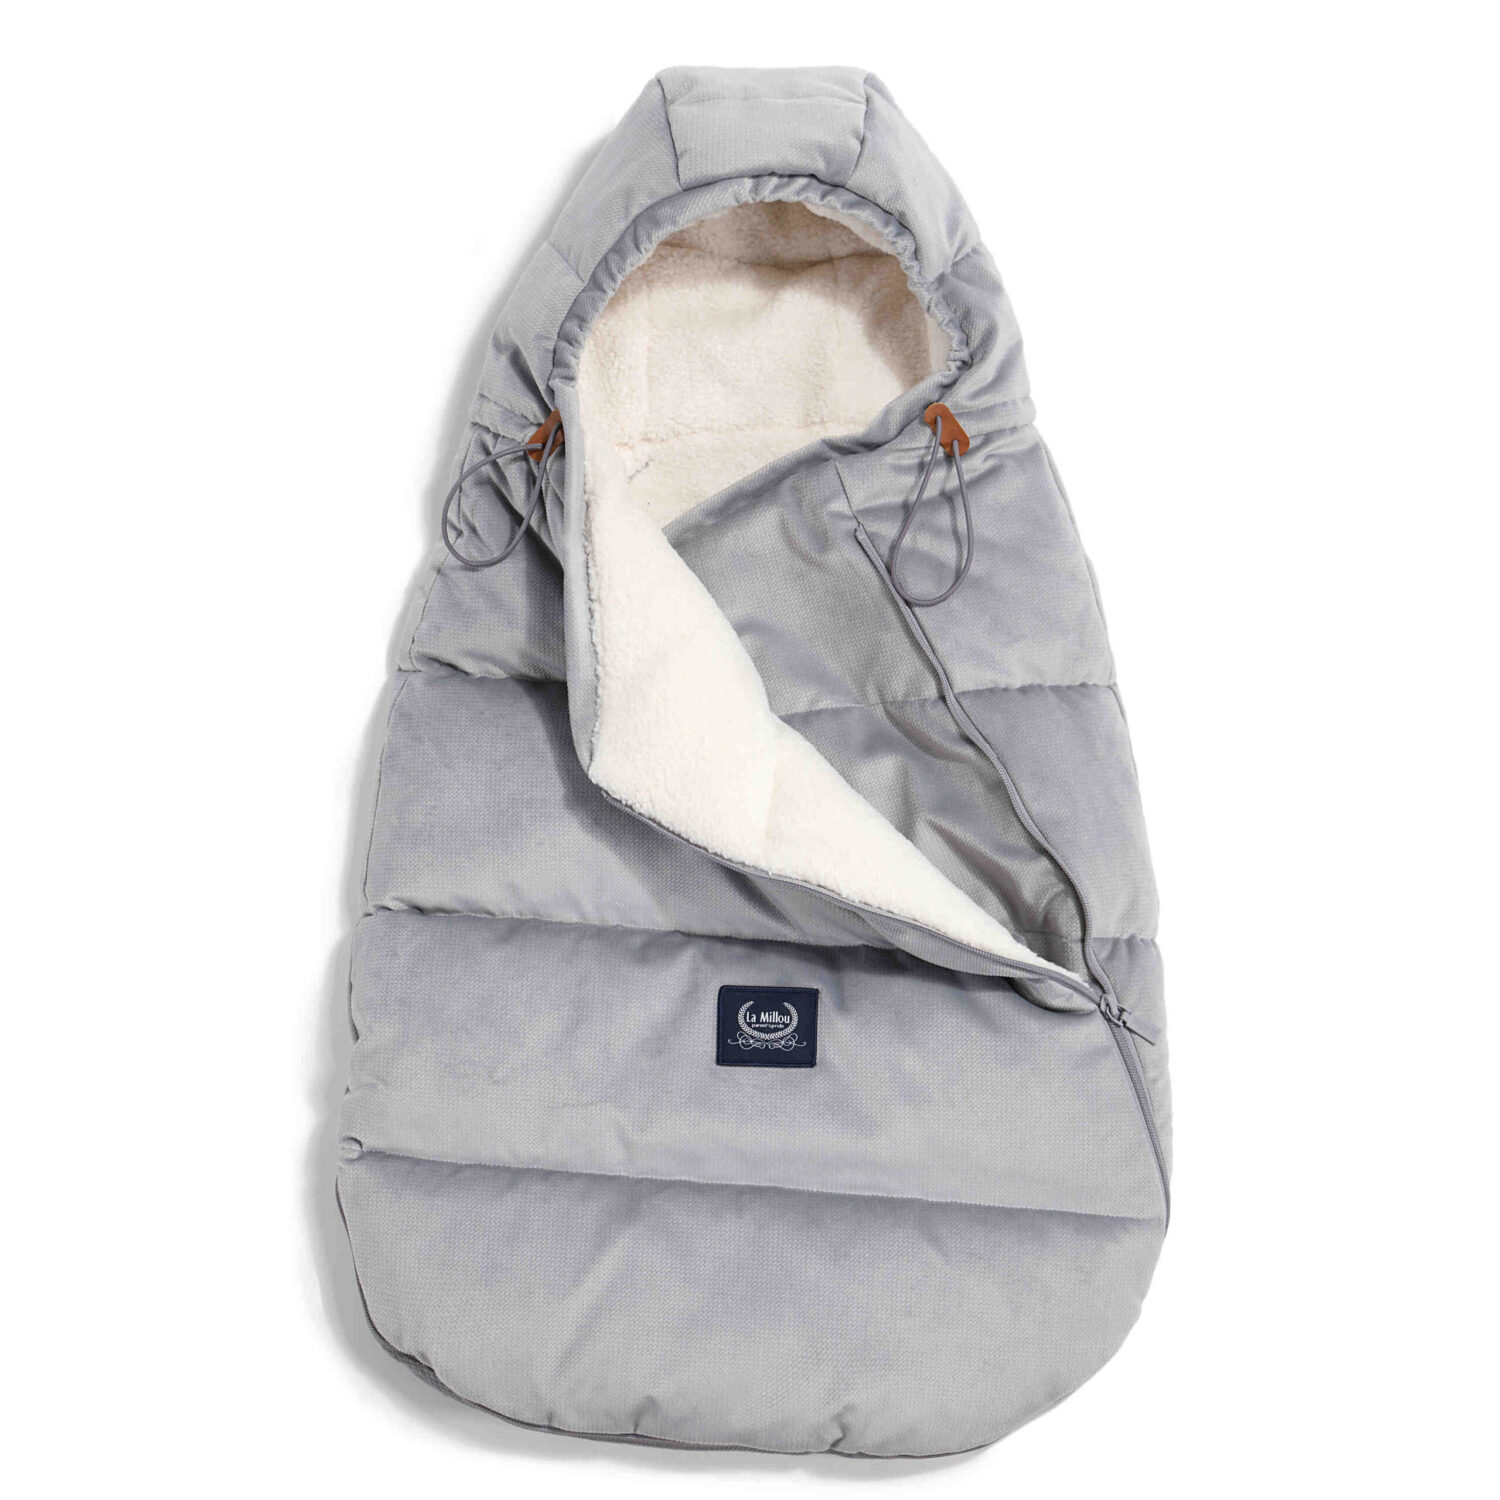 Aspen winterproof stroller bag baby